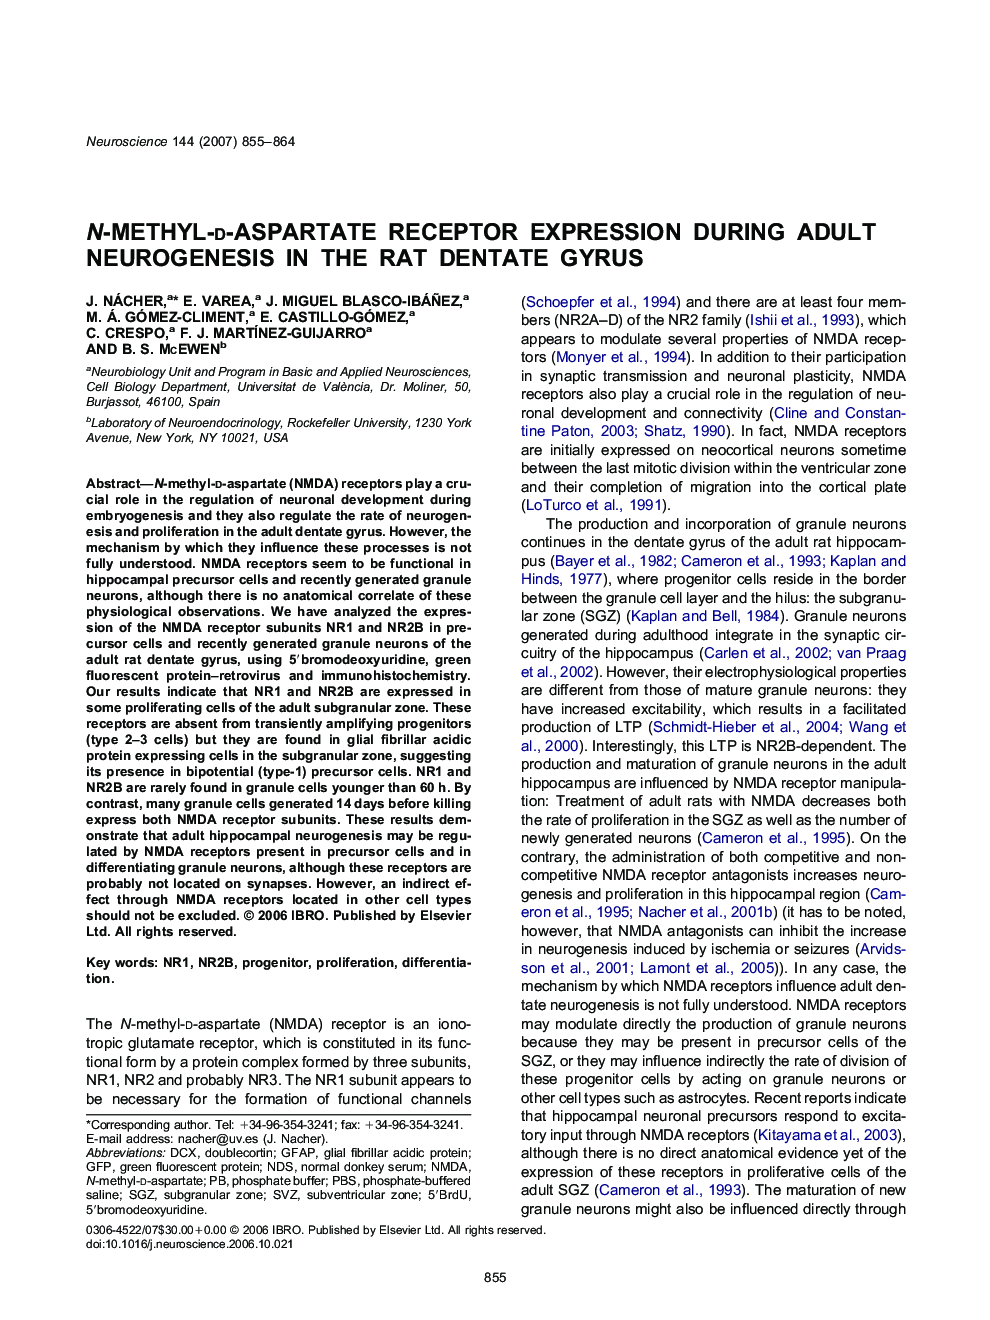 N-methyl-d-aspartate receptor expression during adult neurogenesis in the rat dentate gyrus